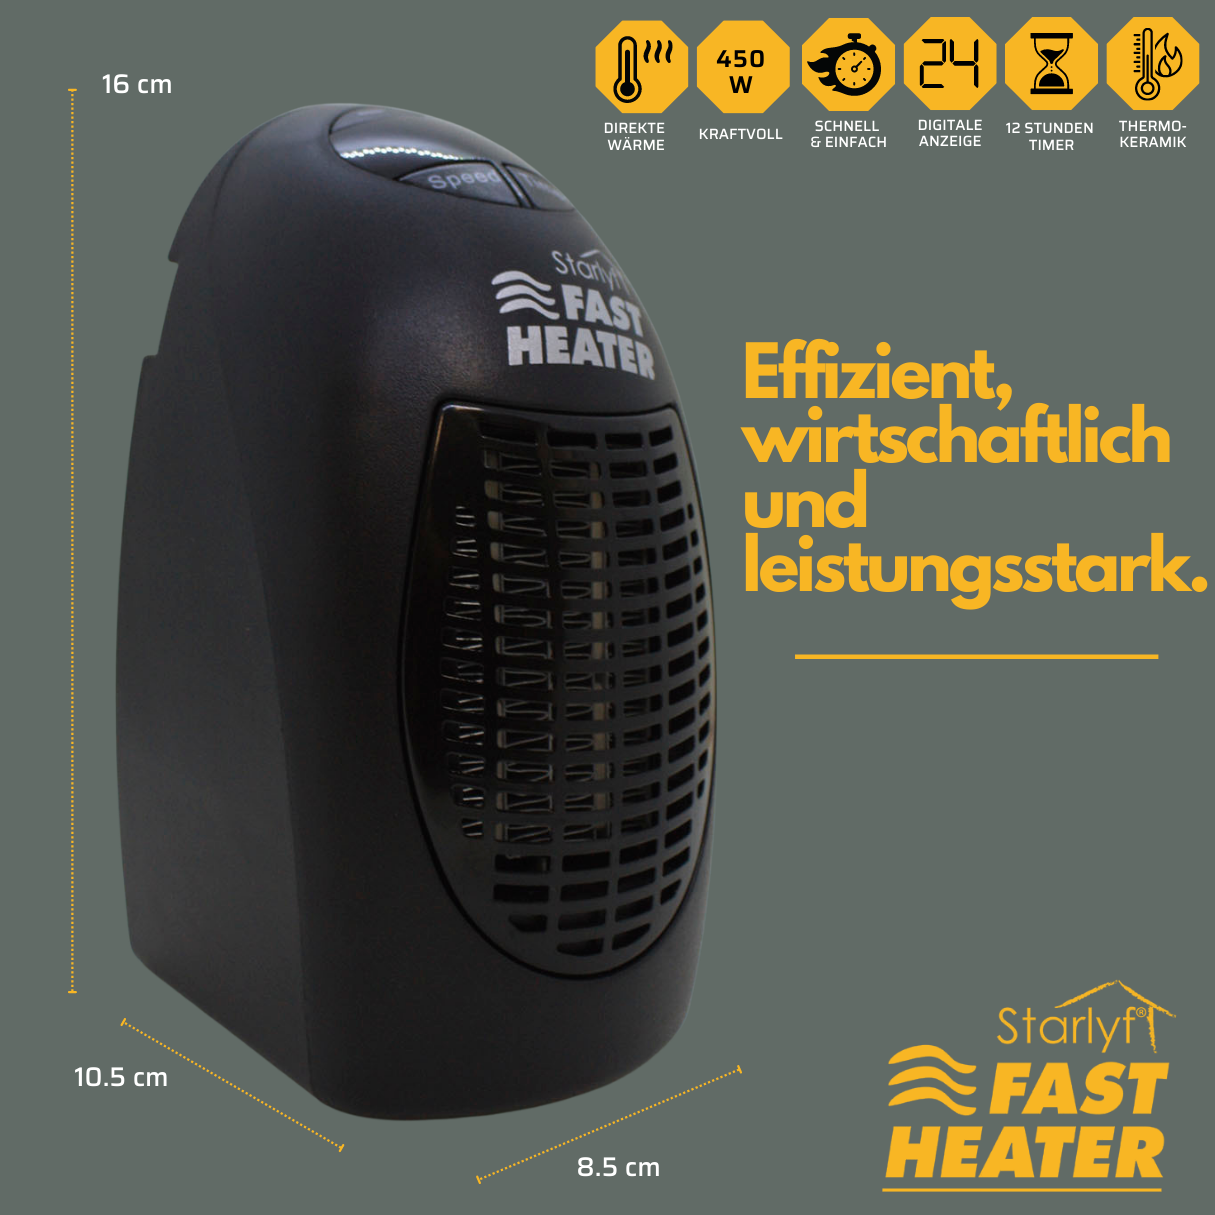 Heizlüfter Fast Heater Watt, Raumgröße: Schwarz m²) 15 (400 STARLYF